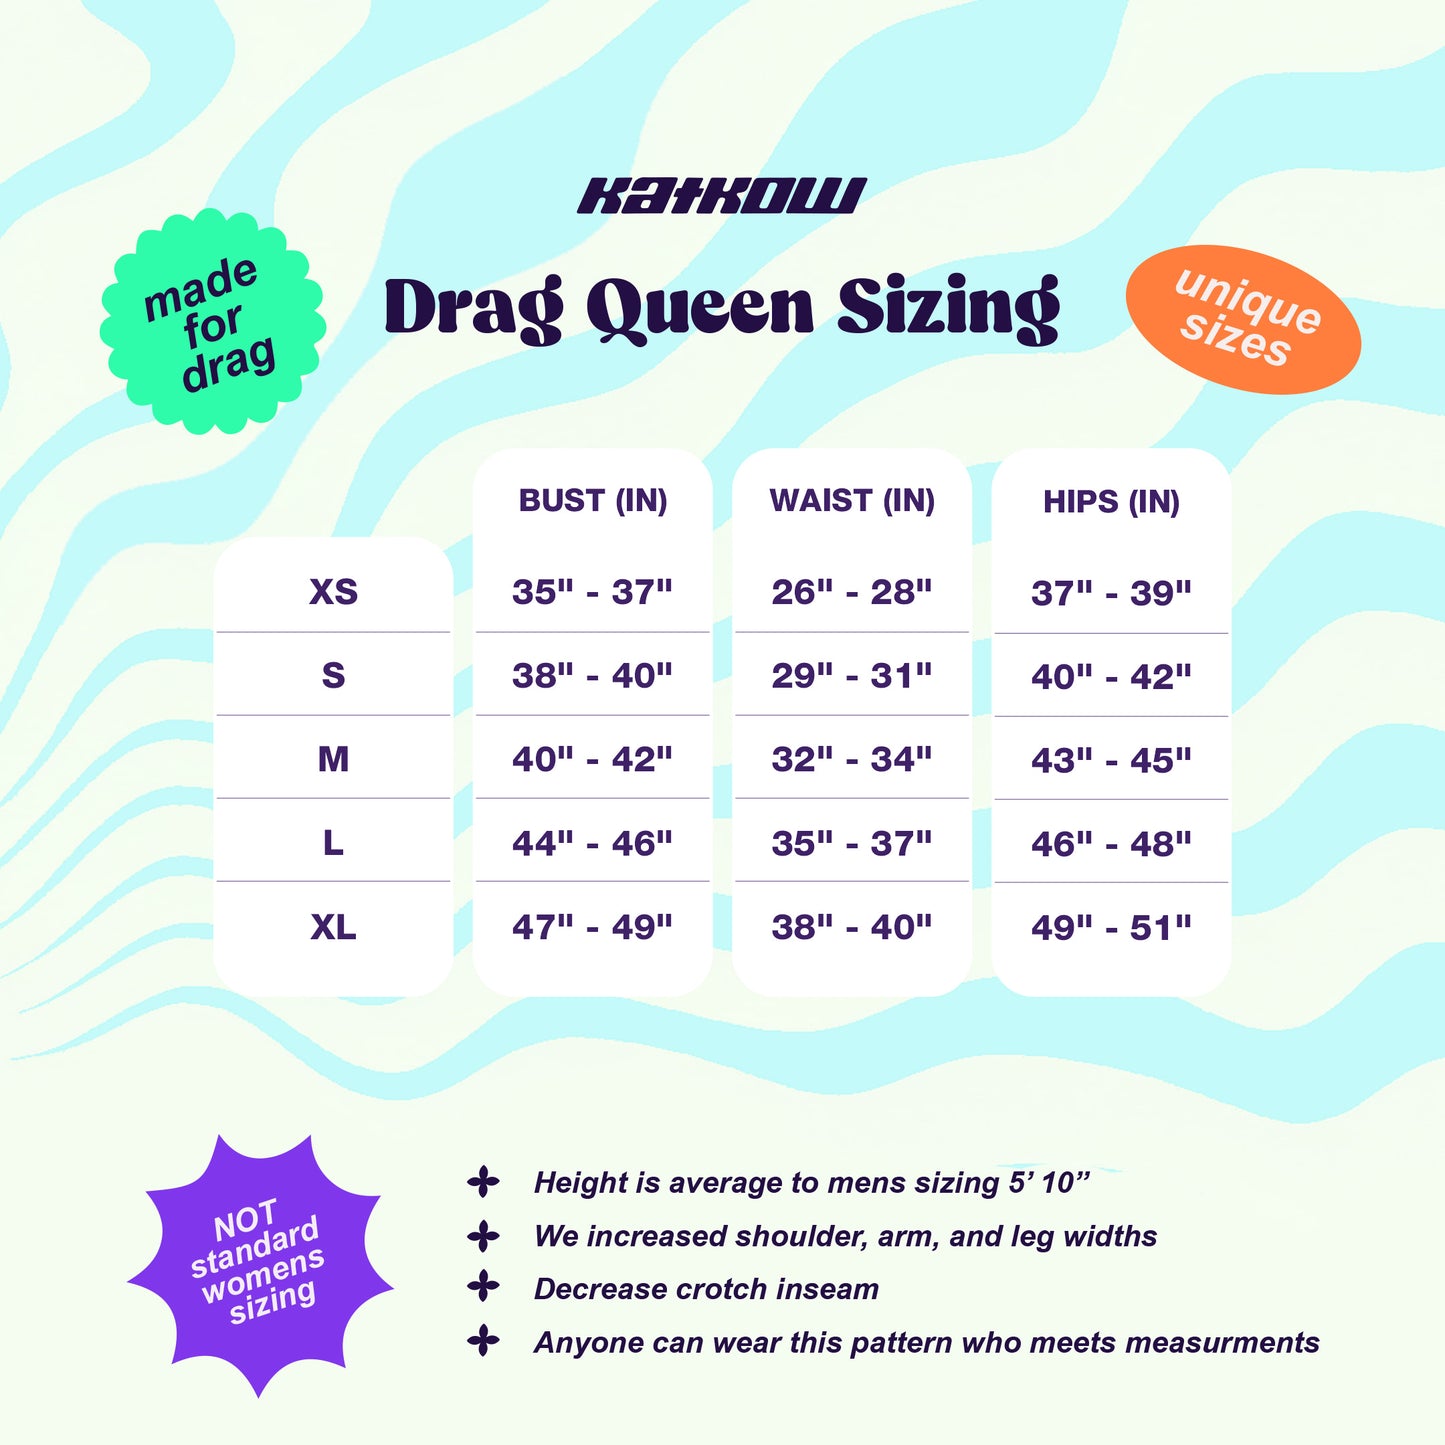 Cutout Stretch Bra Sewing Pattern PDF (XS-XL) for Drag Queens